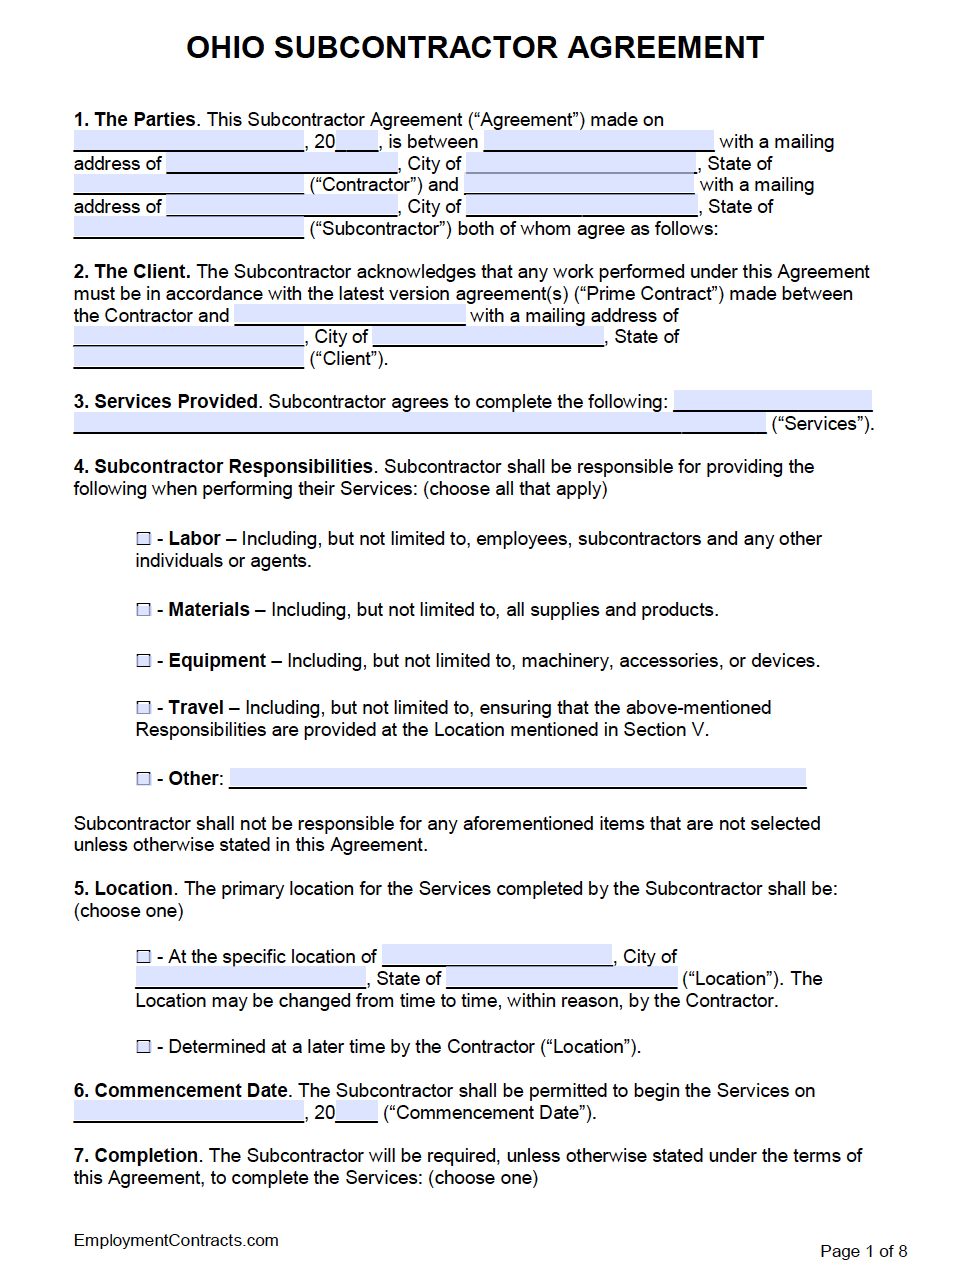 Ohio Subcontractor Agreement Template PDF Word